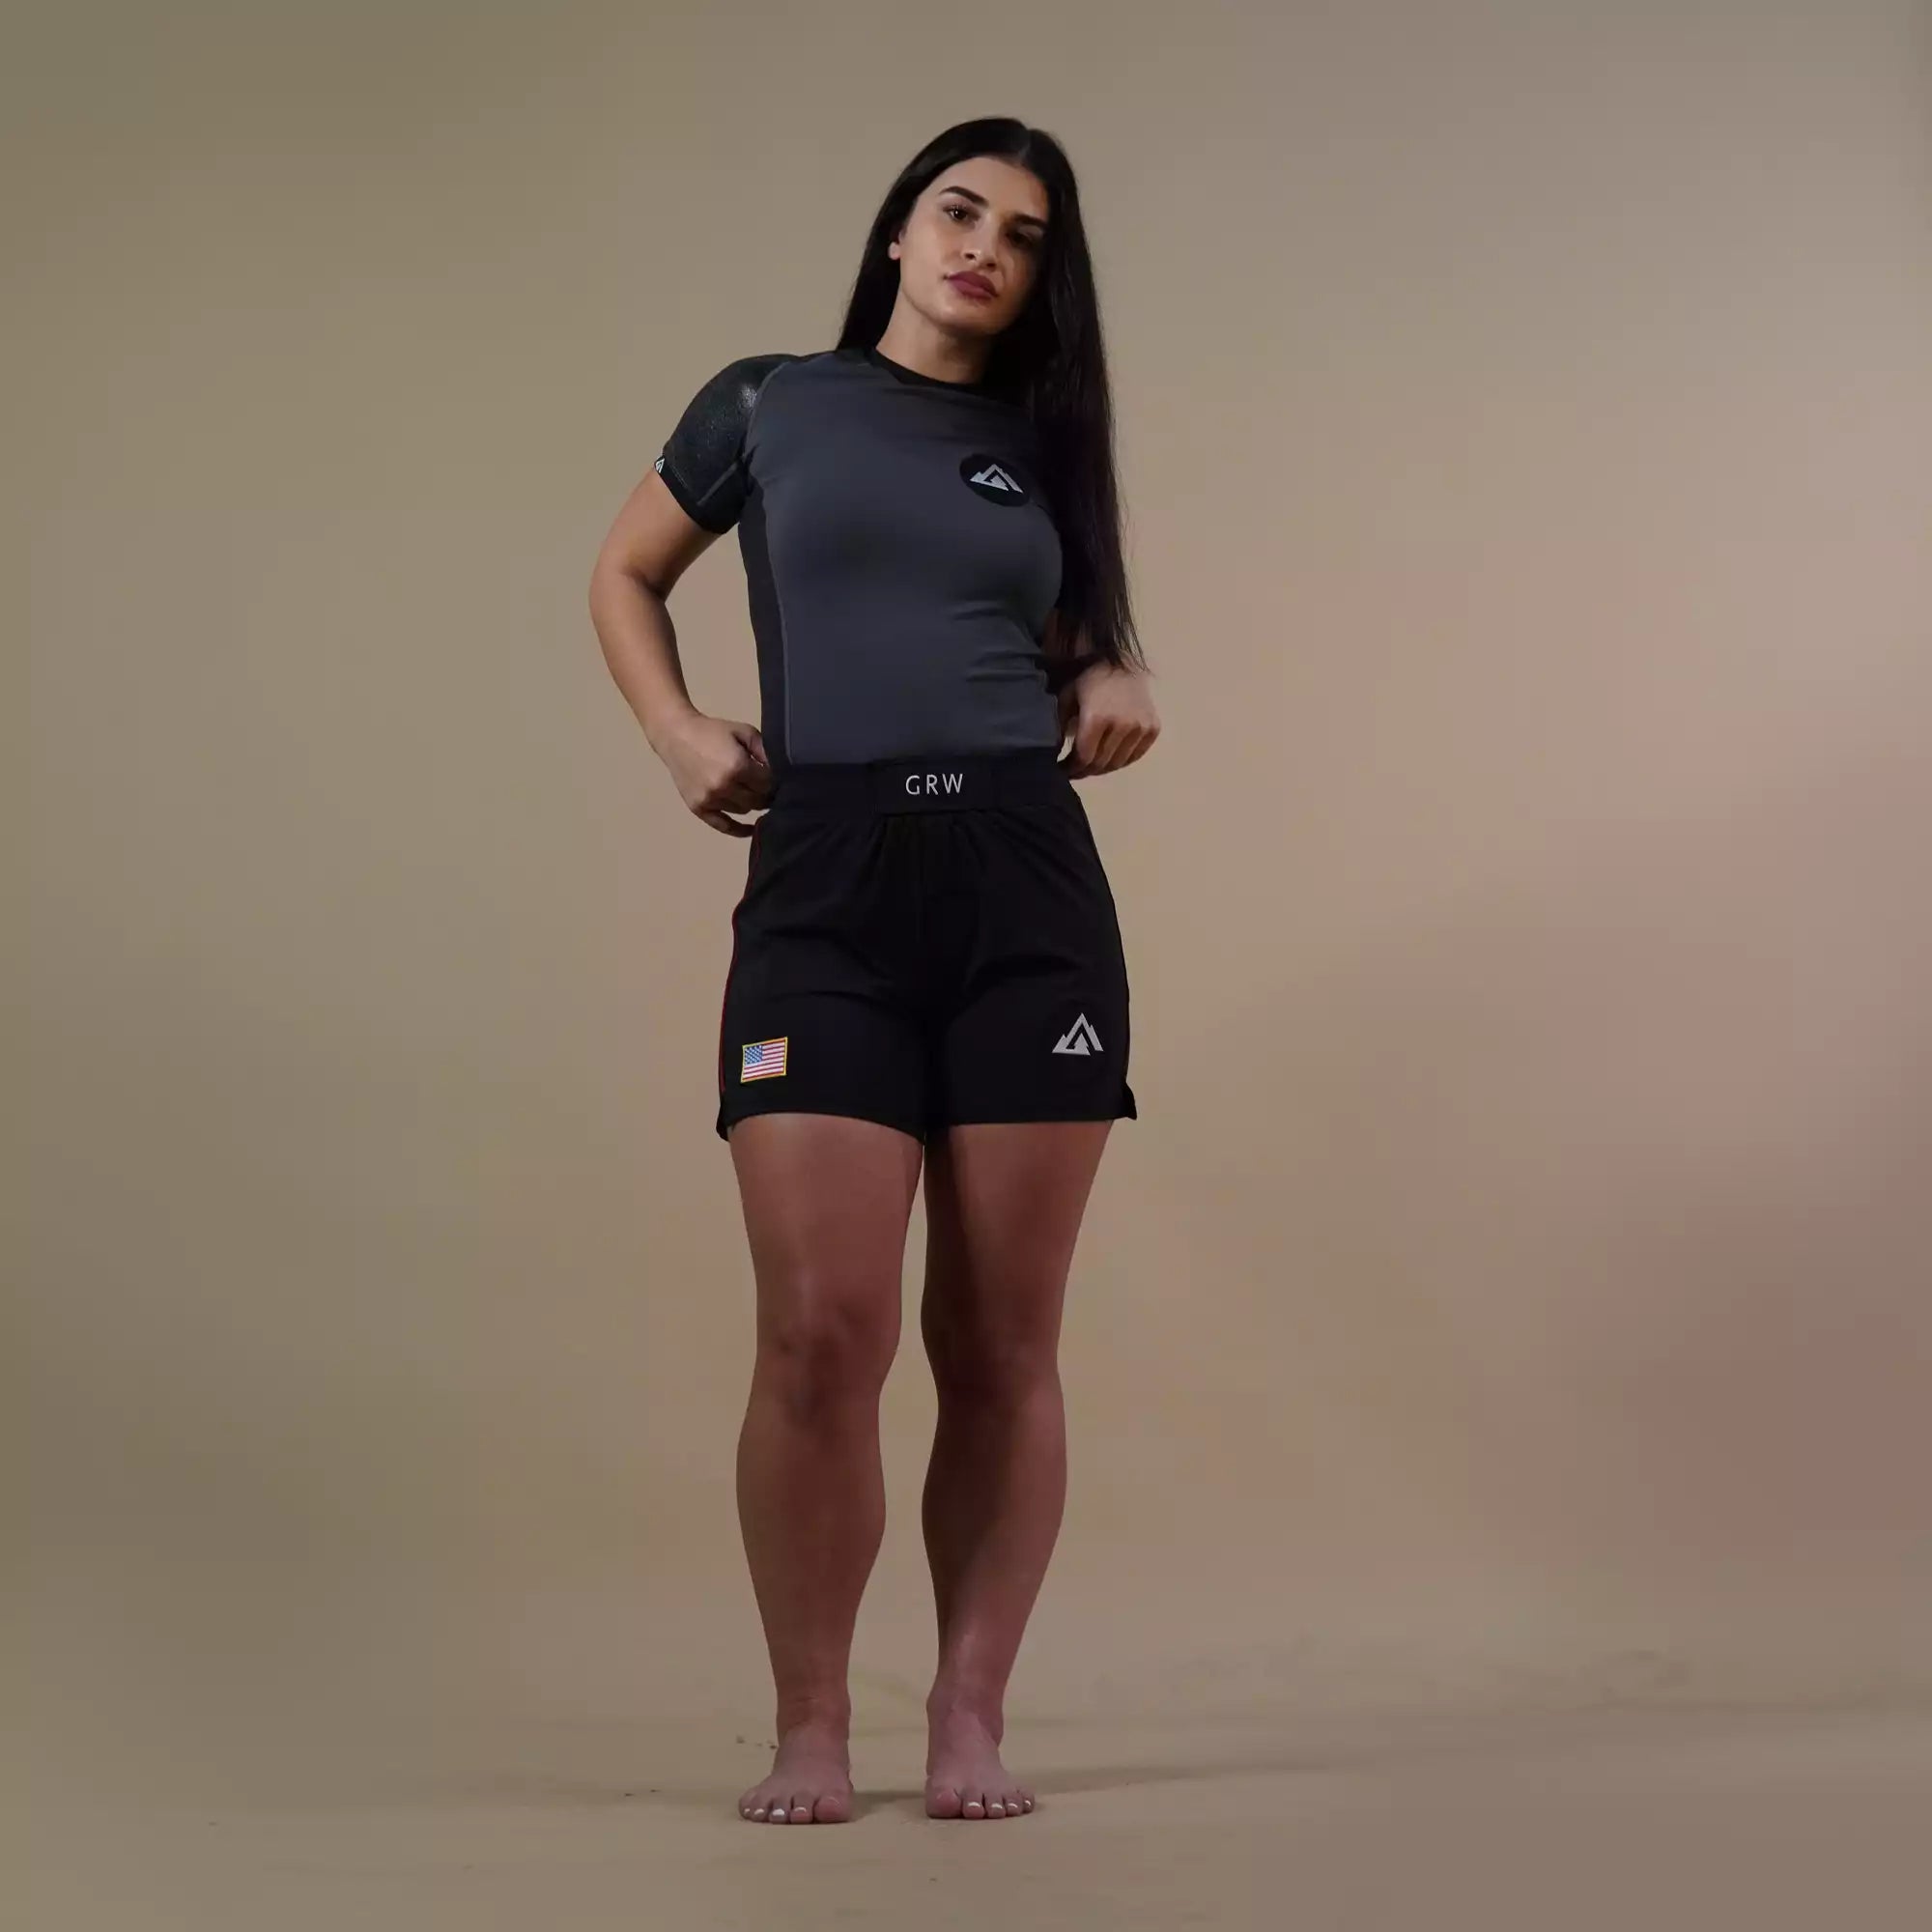 GRW Women's Black Jiu Jitsu BJJ Fight Grappling Shorts model